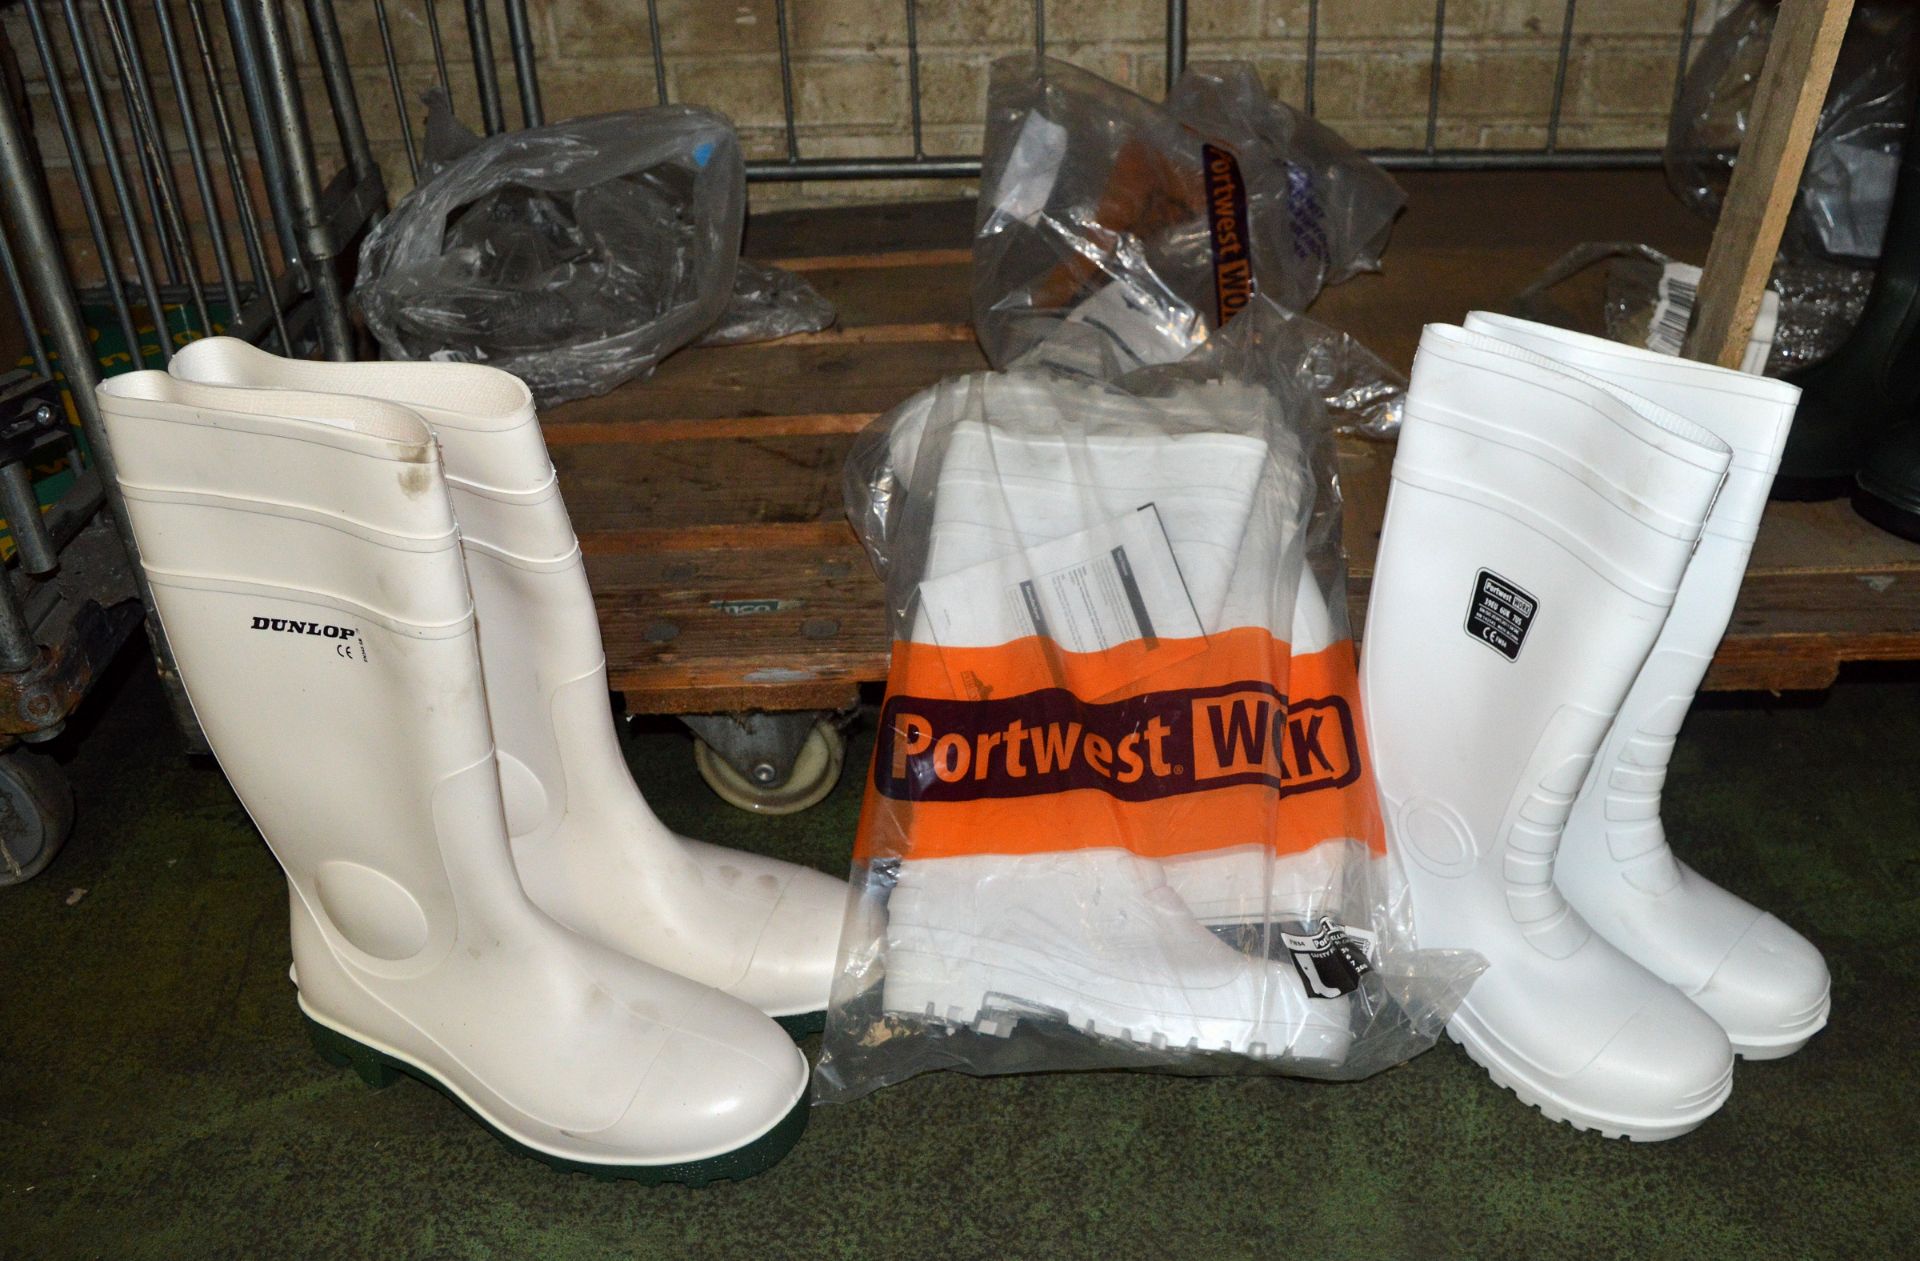 3x Pairs of wellington boots - 2x Portwest work EU39 / UK6, 1x Dunlop EU47 / UK12 - Image 2 of 2